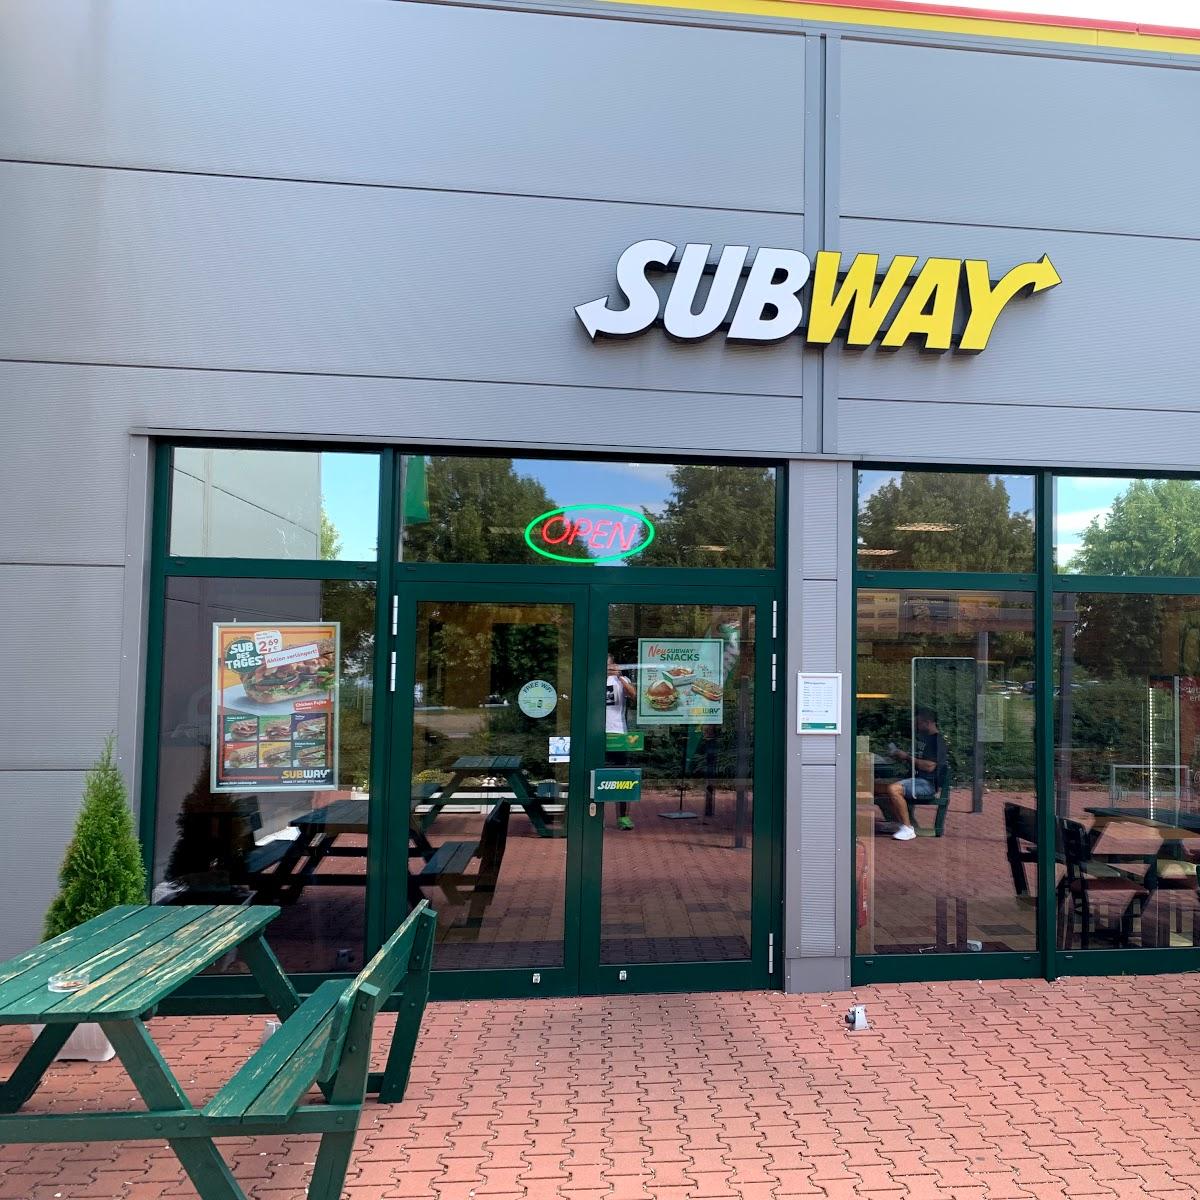 Restaurant "Subway" in Erfurt